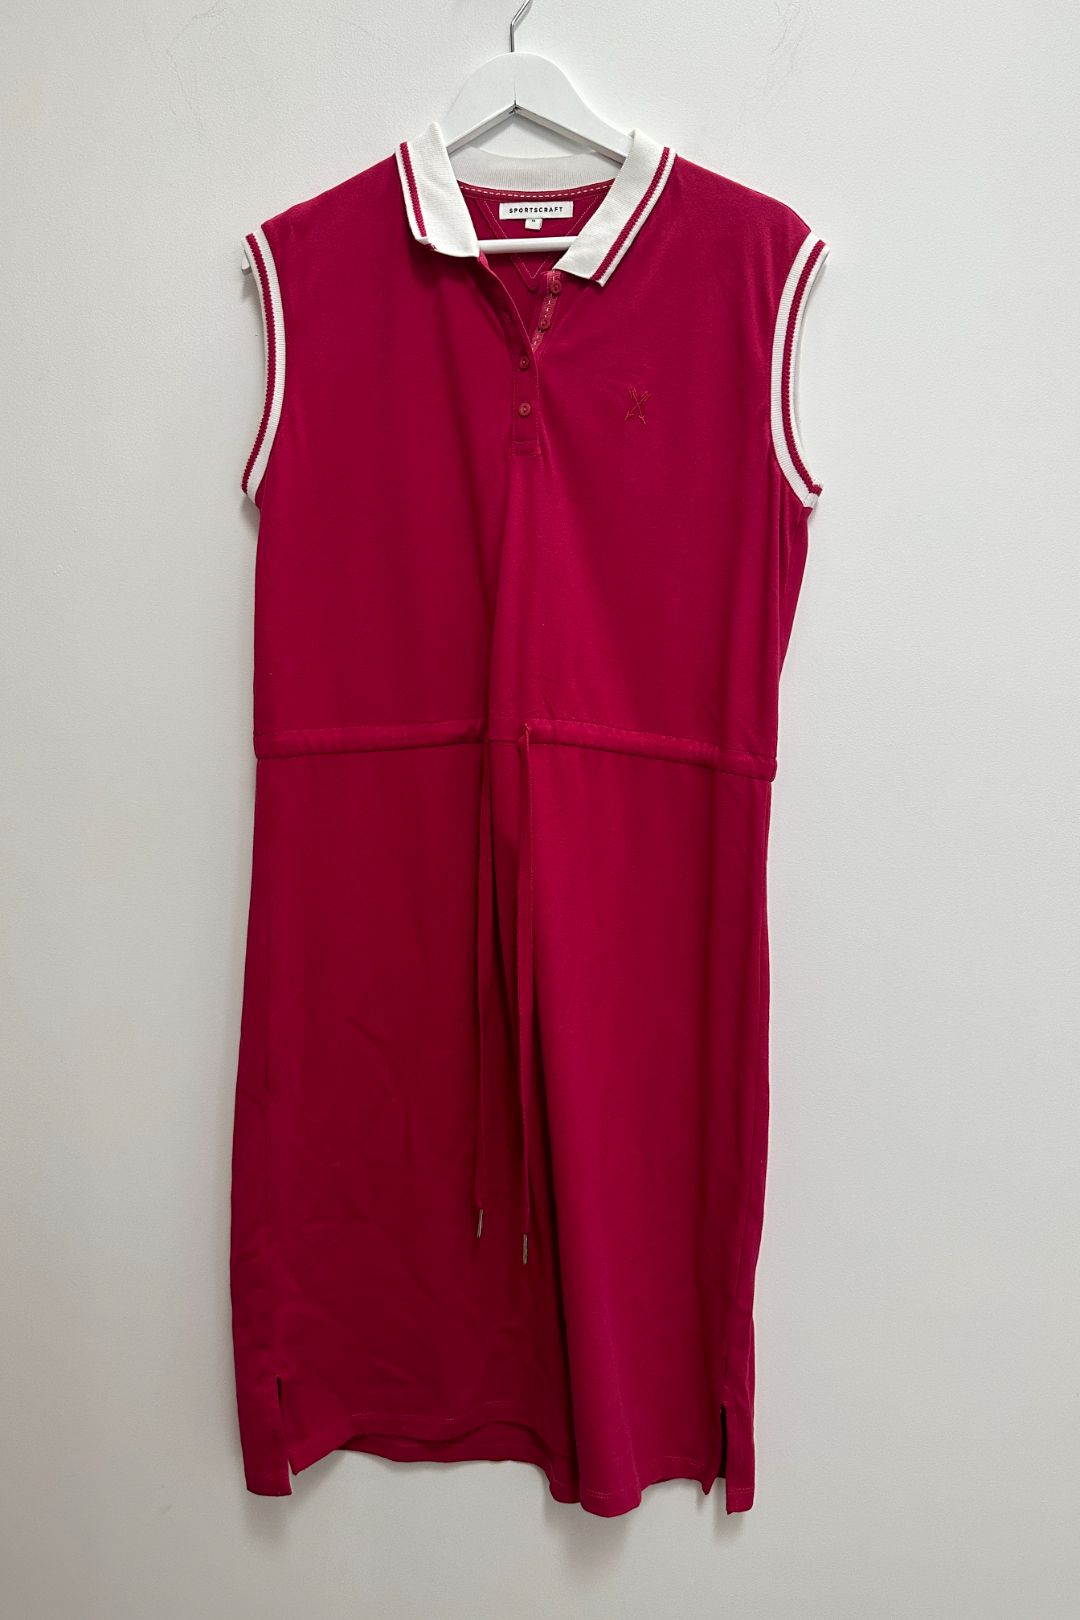 Sportscraft Pink Sleeveless Polo Dress